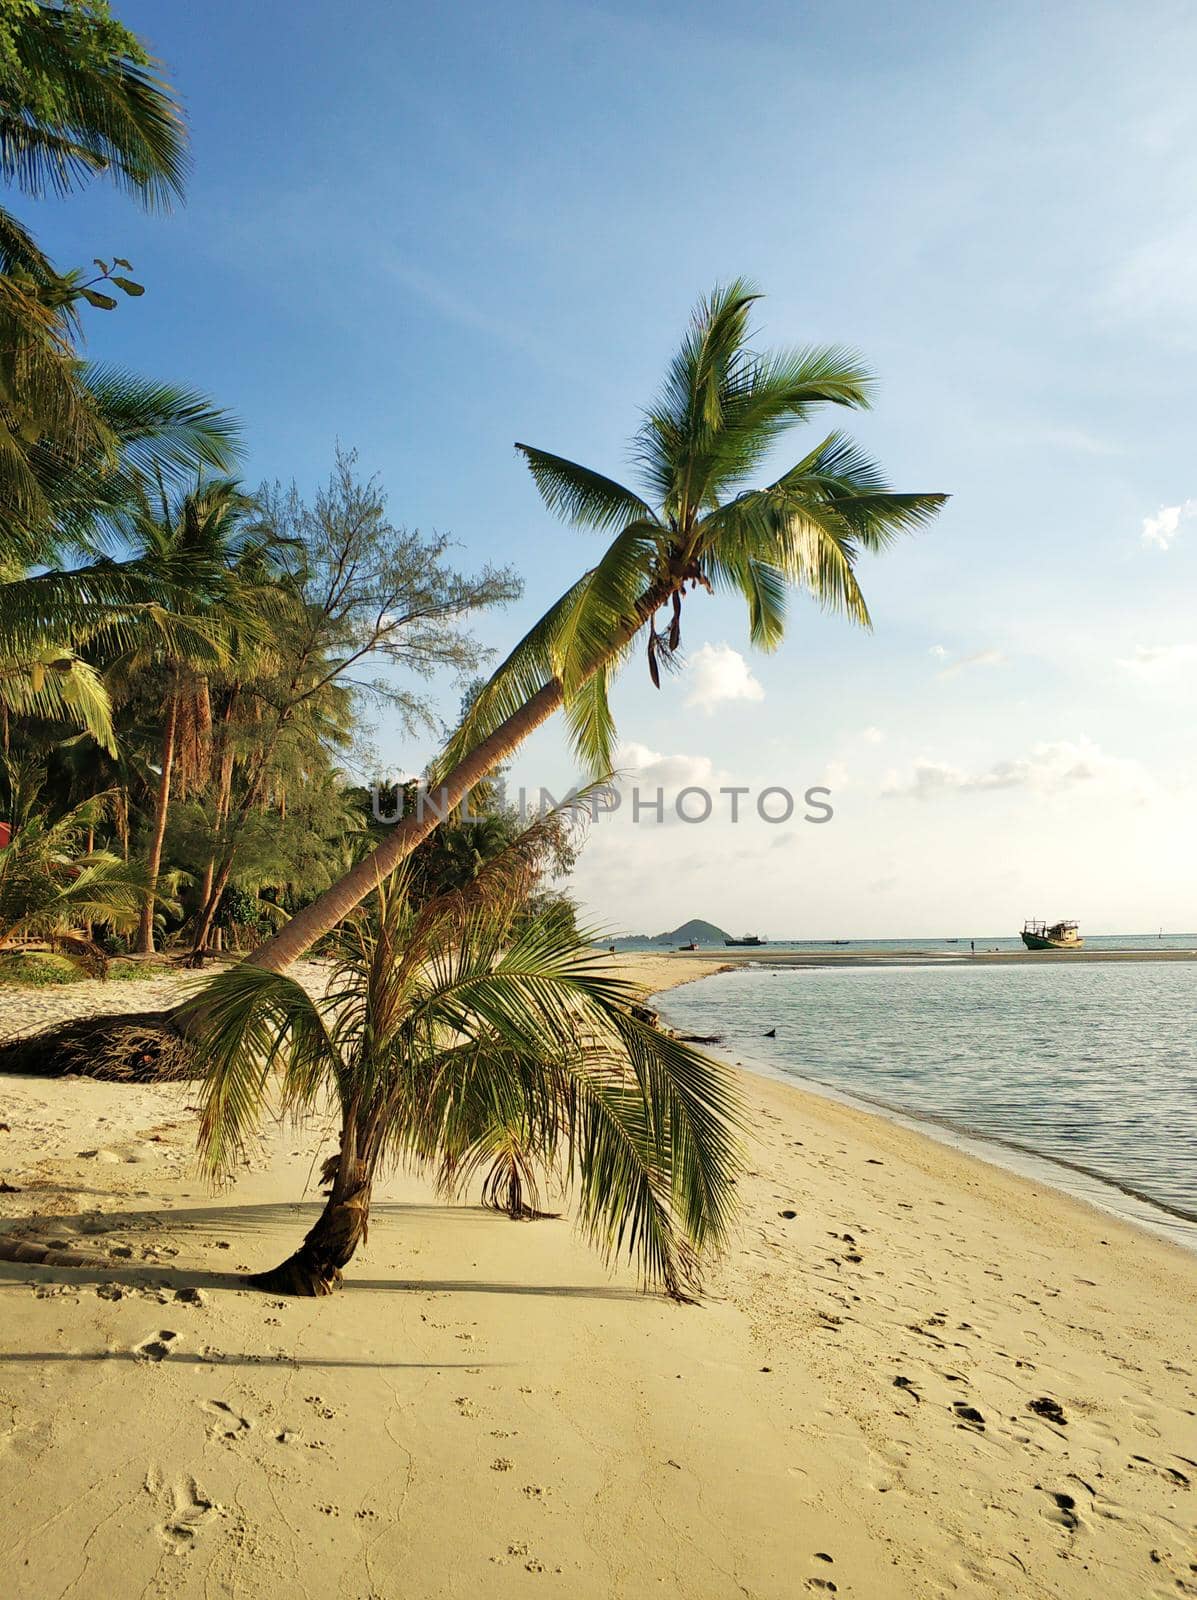 Coastline with sandy beach and palm trees on a tropical island.